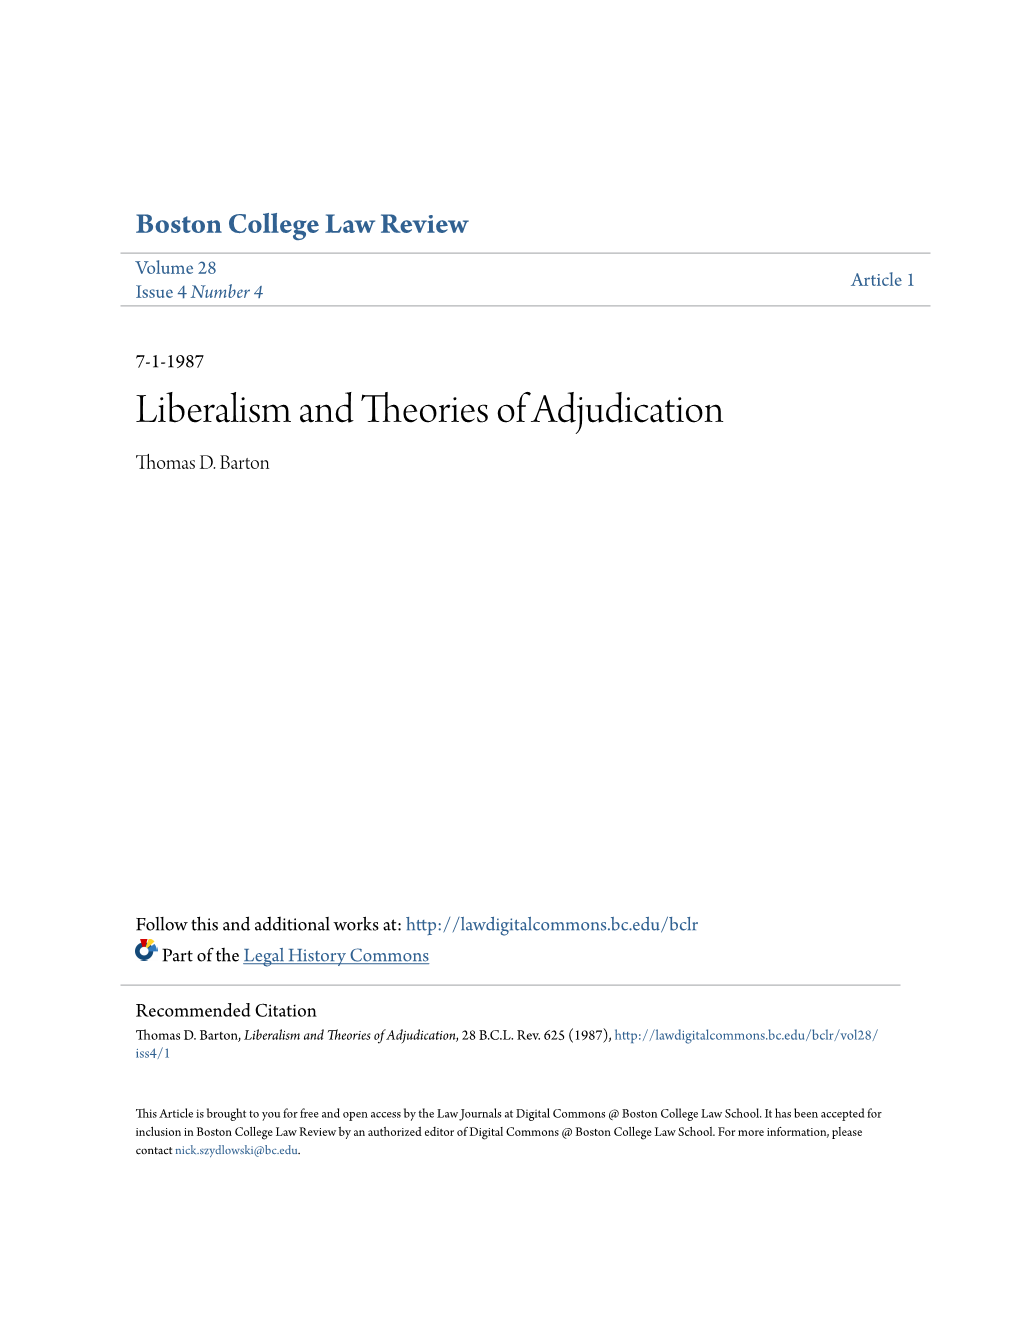 Liberalism and Theories of Adjudication Thomas D